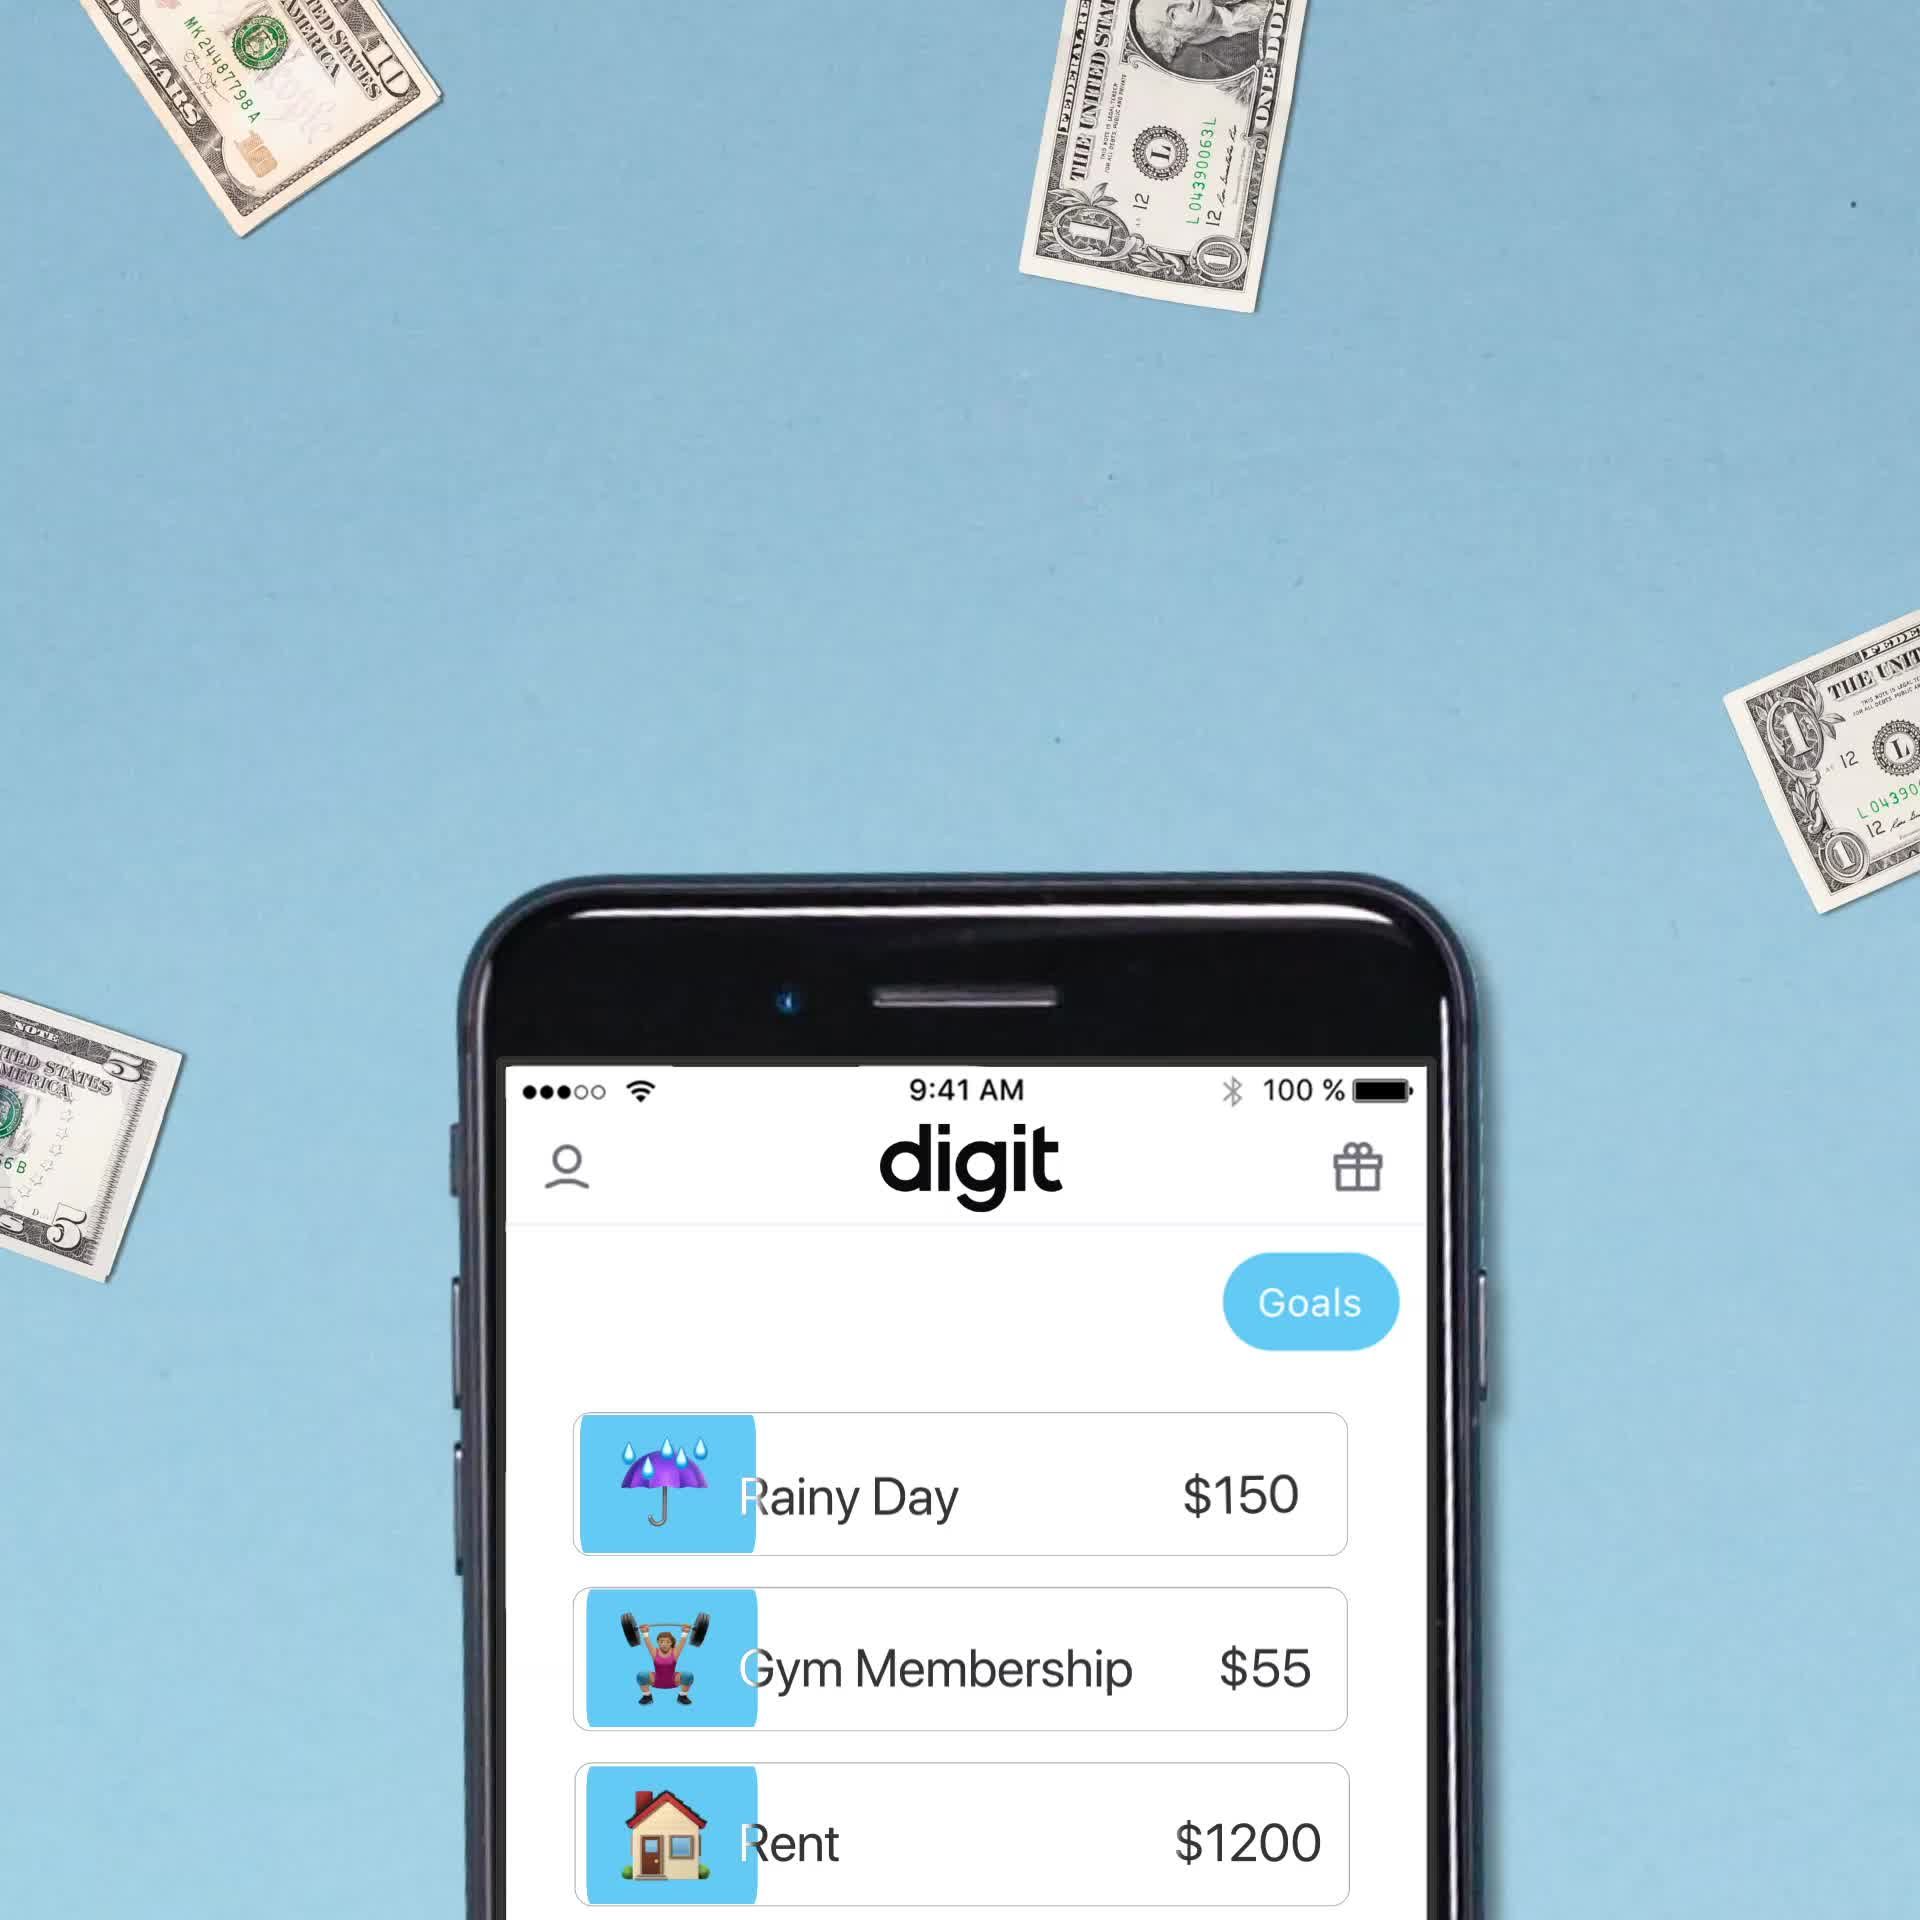 ad for a money saving app